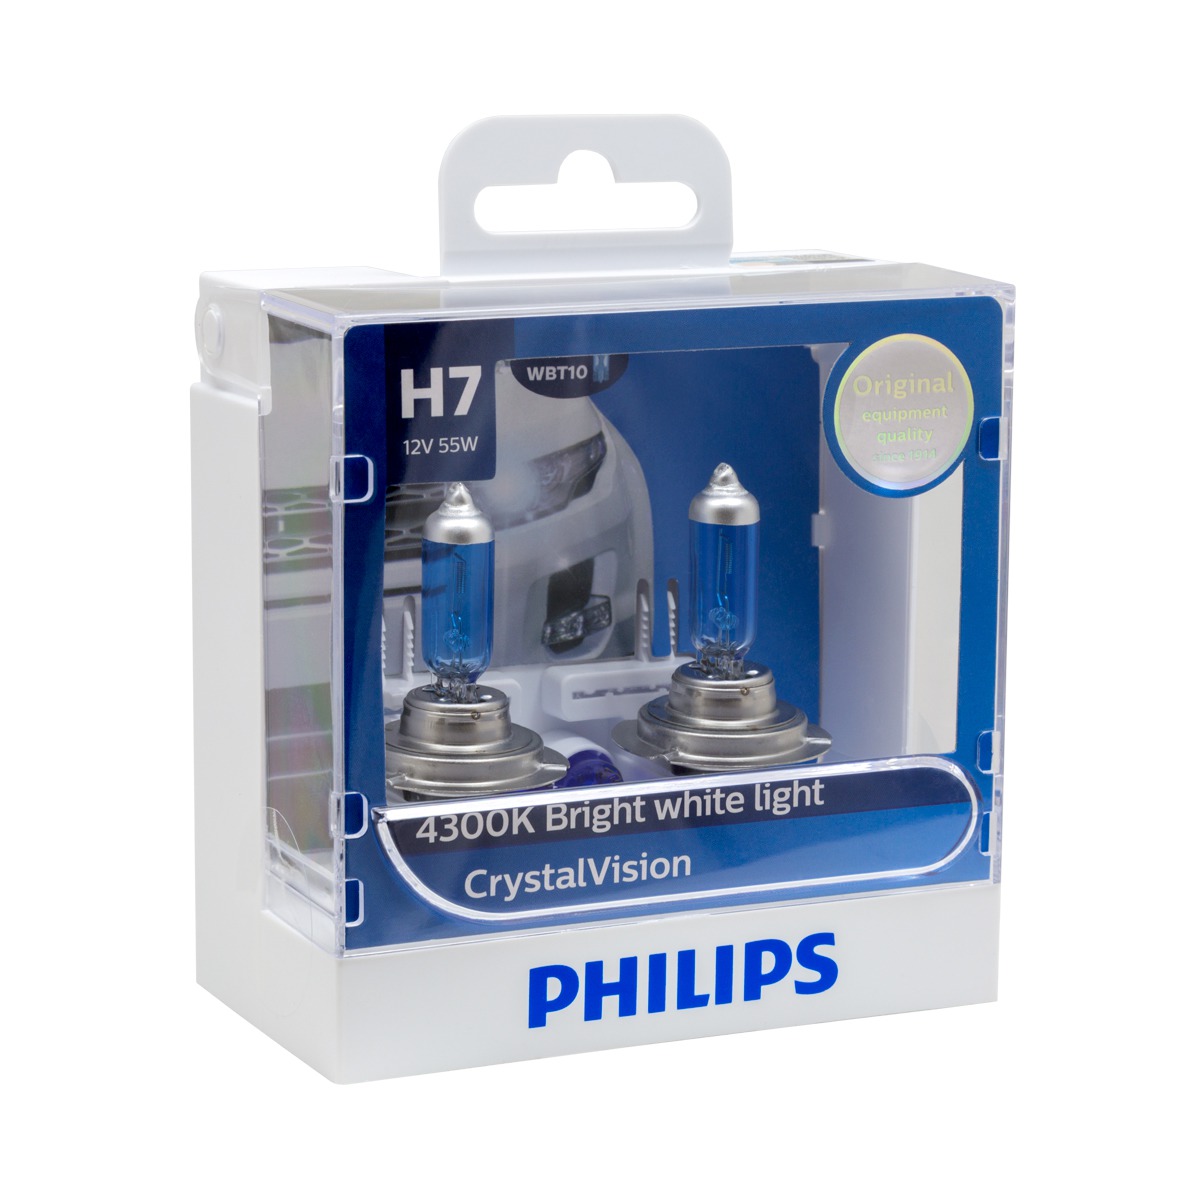 Philips h7 купить. 12972 Philips h7. Philips h7 (55w 12v) Crystal Vision 2шт. (CRYSTALVISION) h7 12v 55w 4300k блистер 2 шт.. Philips Crystal Vision 4300k.